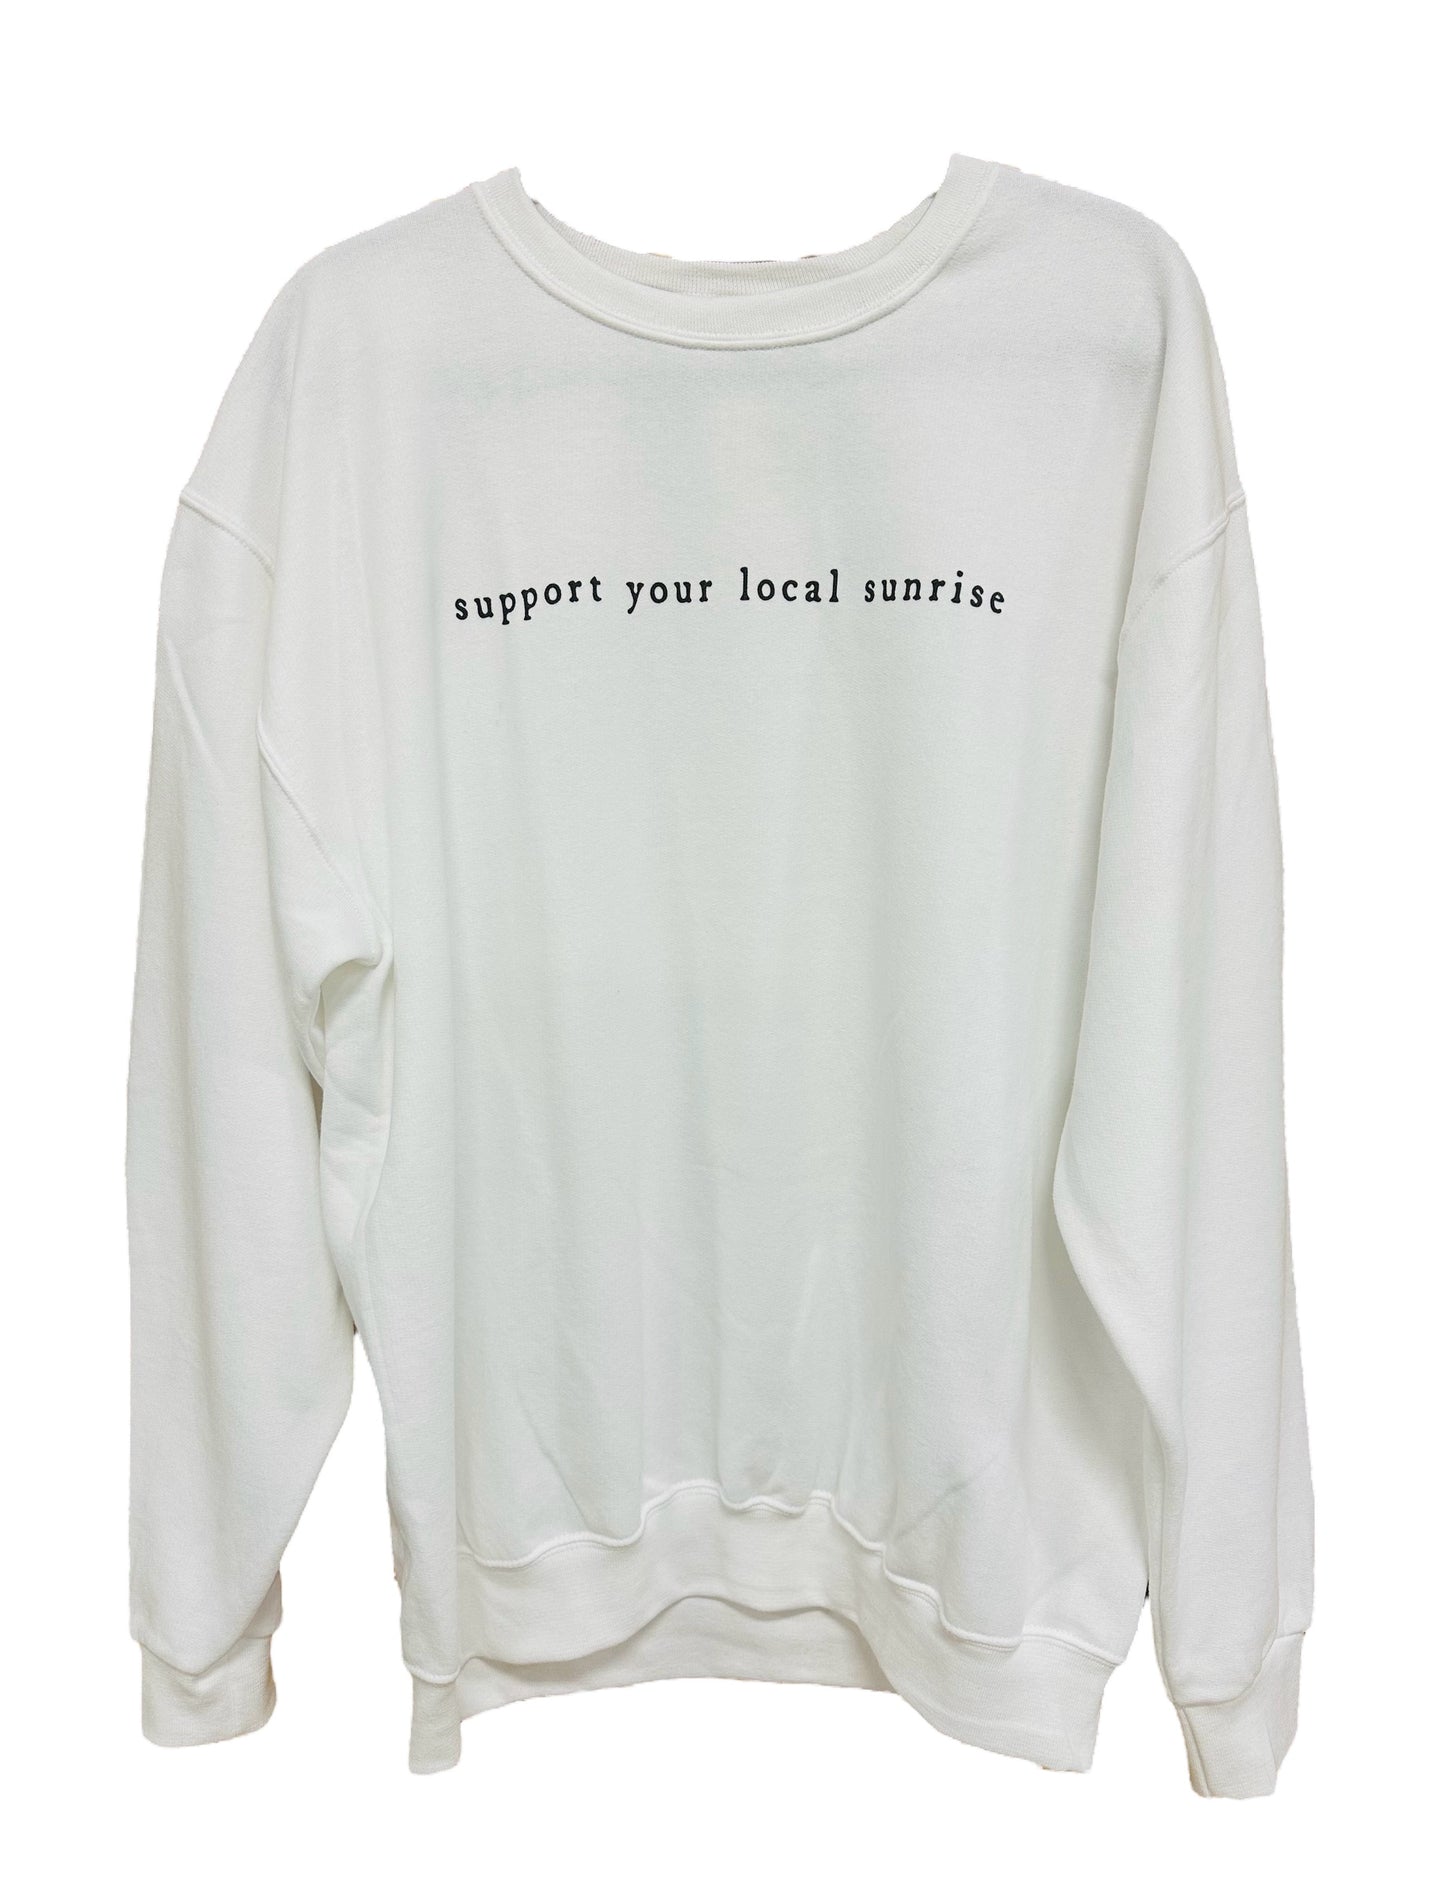 support your local sunrise crewneck sweatshirt